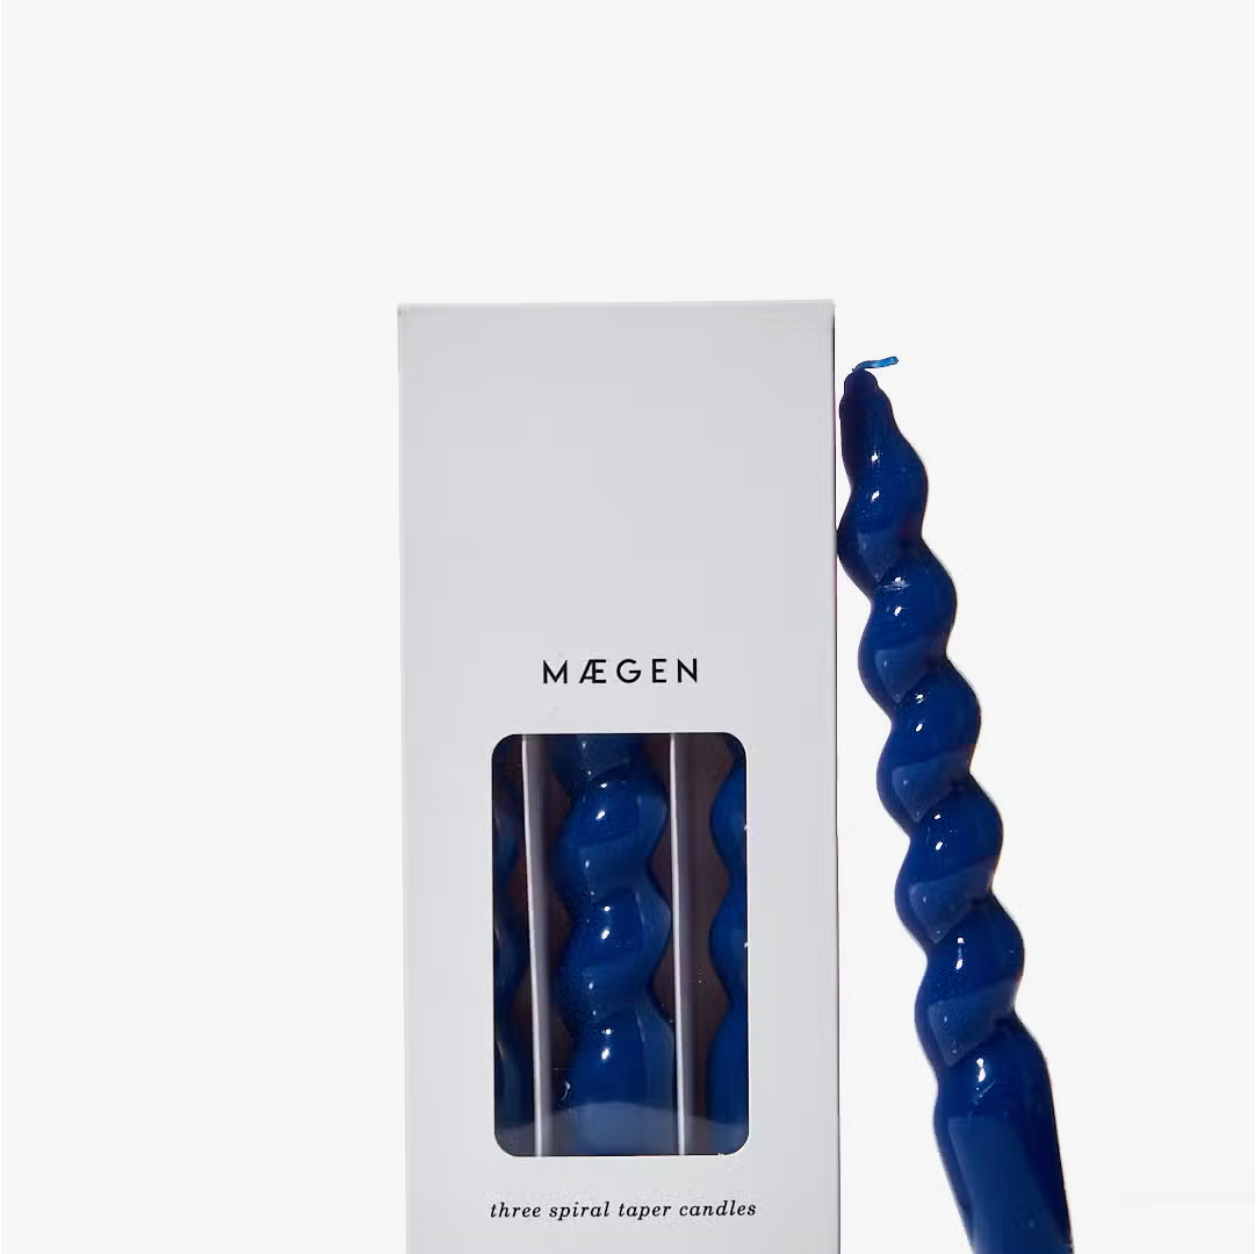 Spiral Taper Candles by Maegen Navy Blue